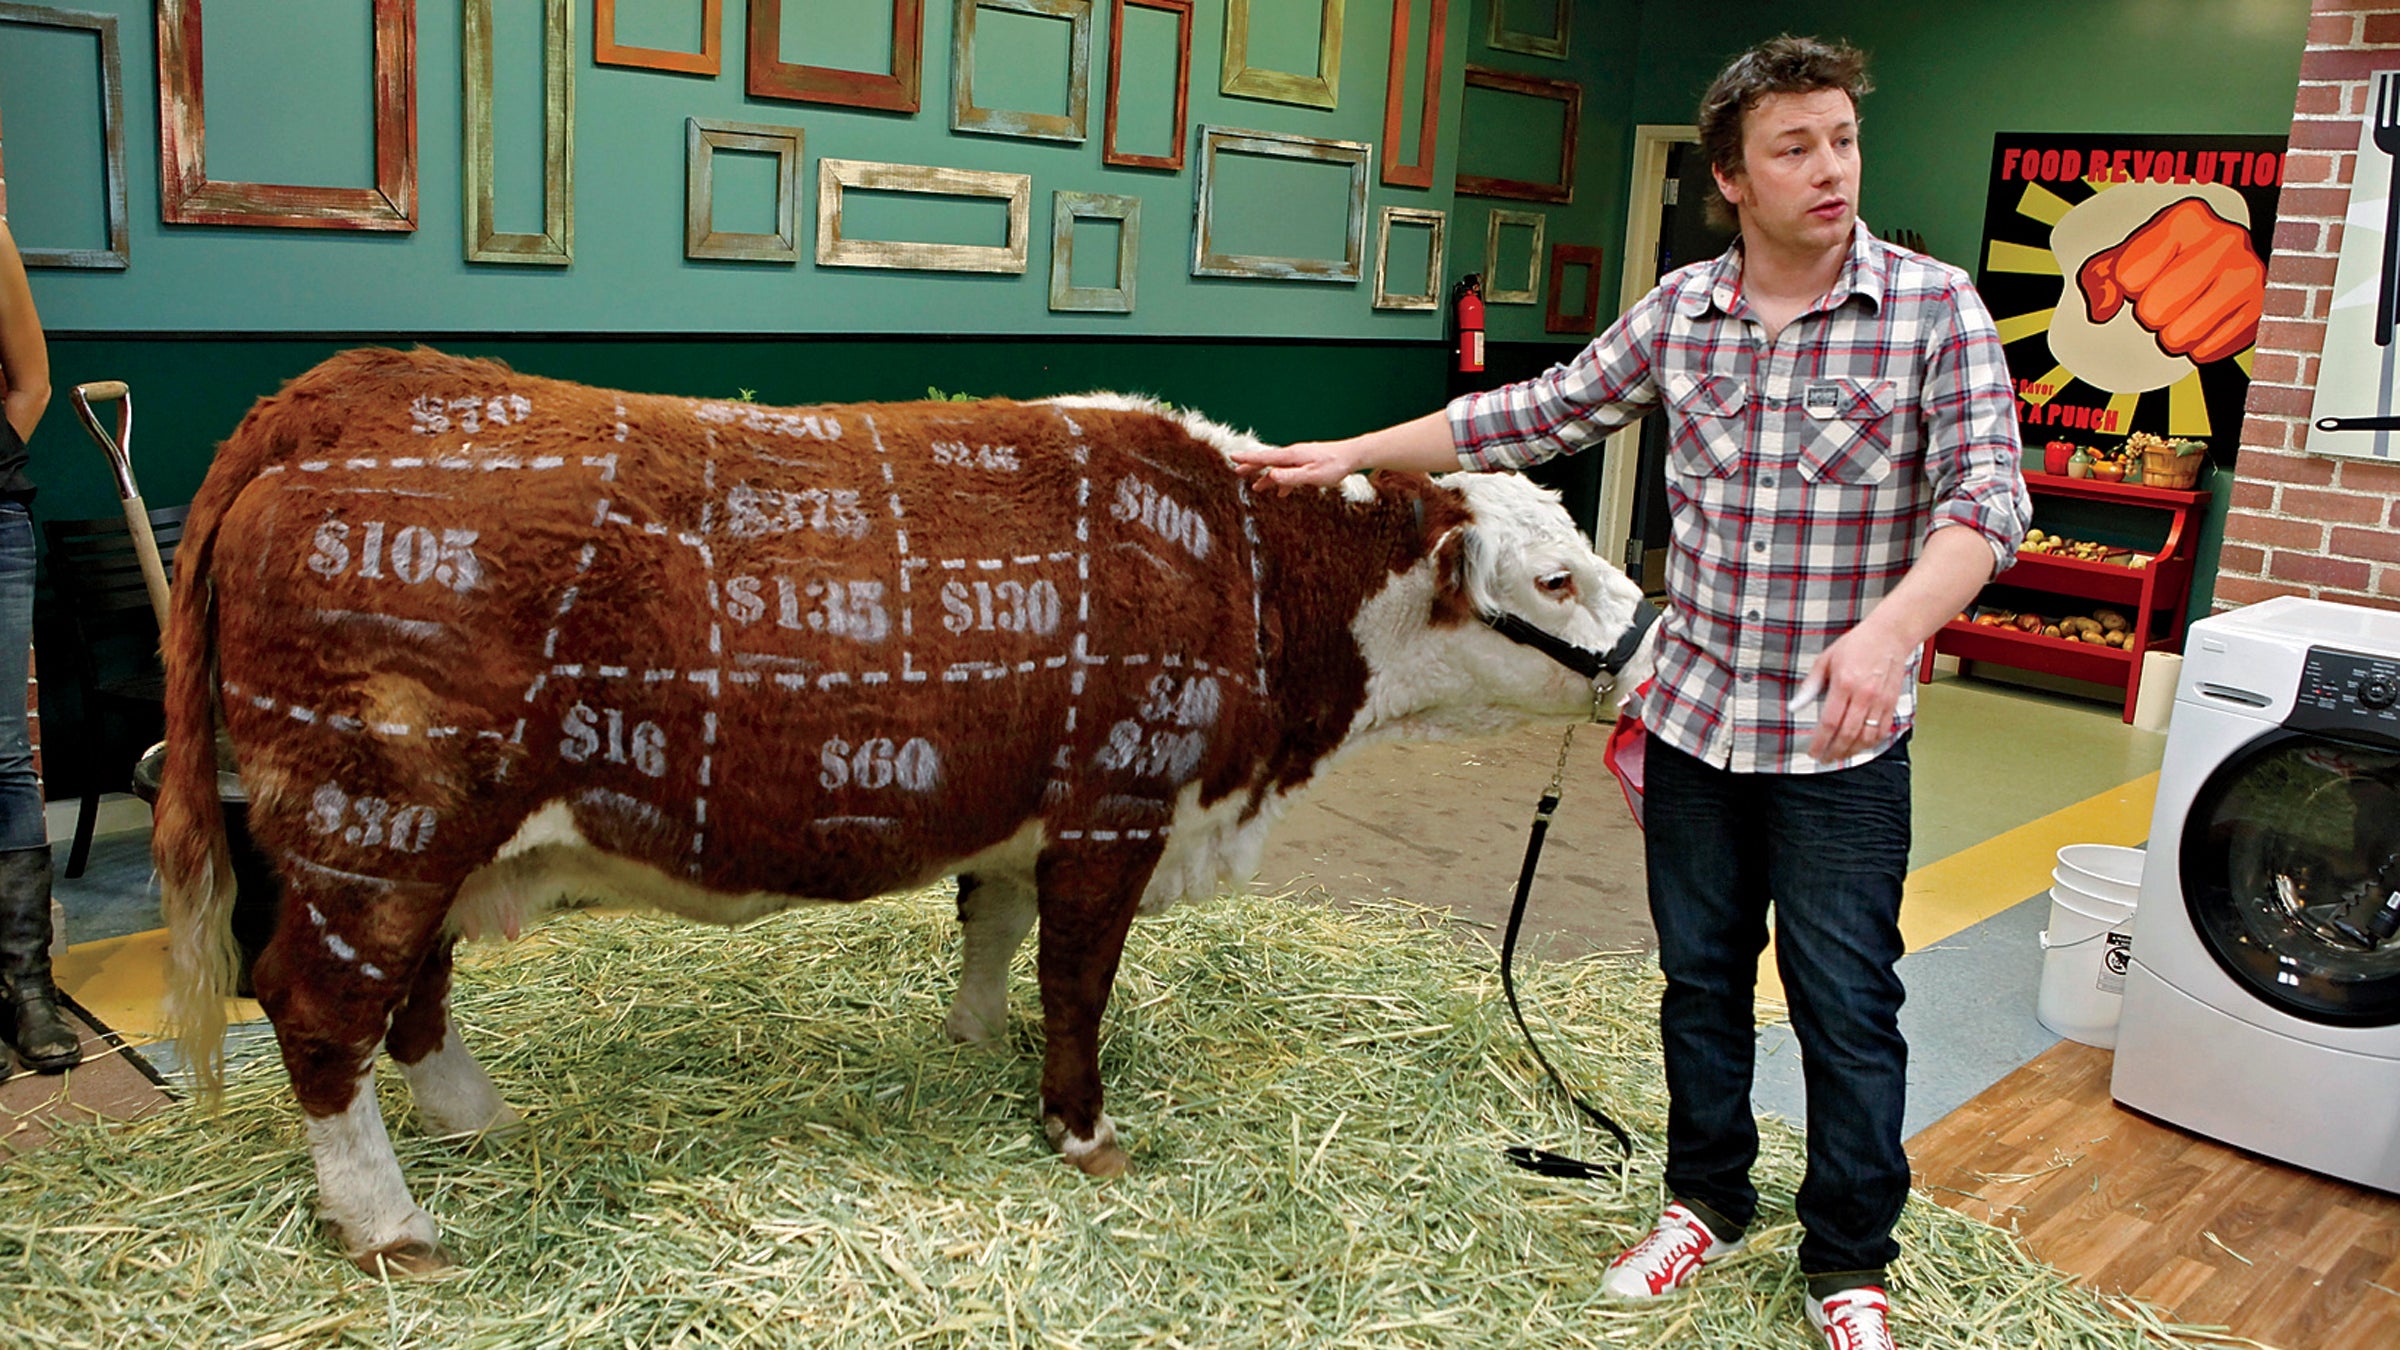 Jamie Oliver on return to UK restaurant industry: 'I am trusting